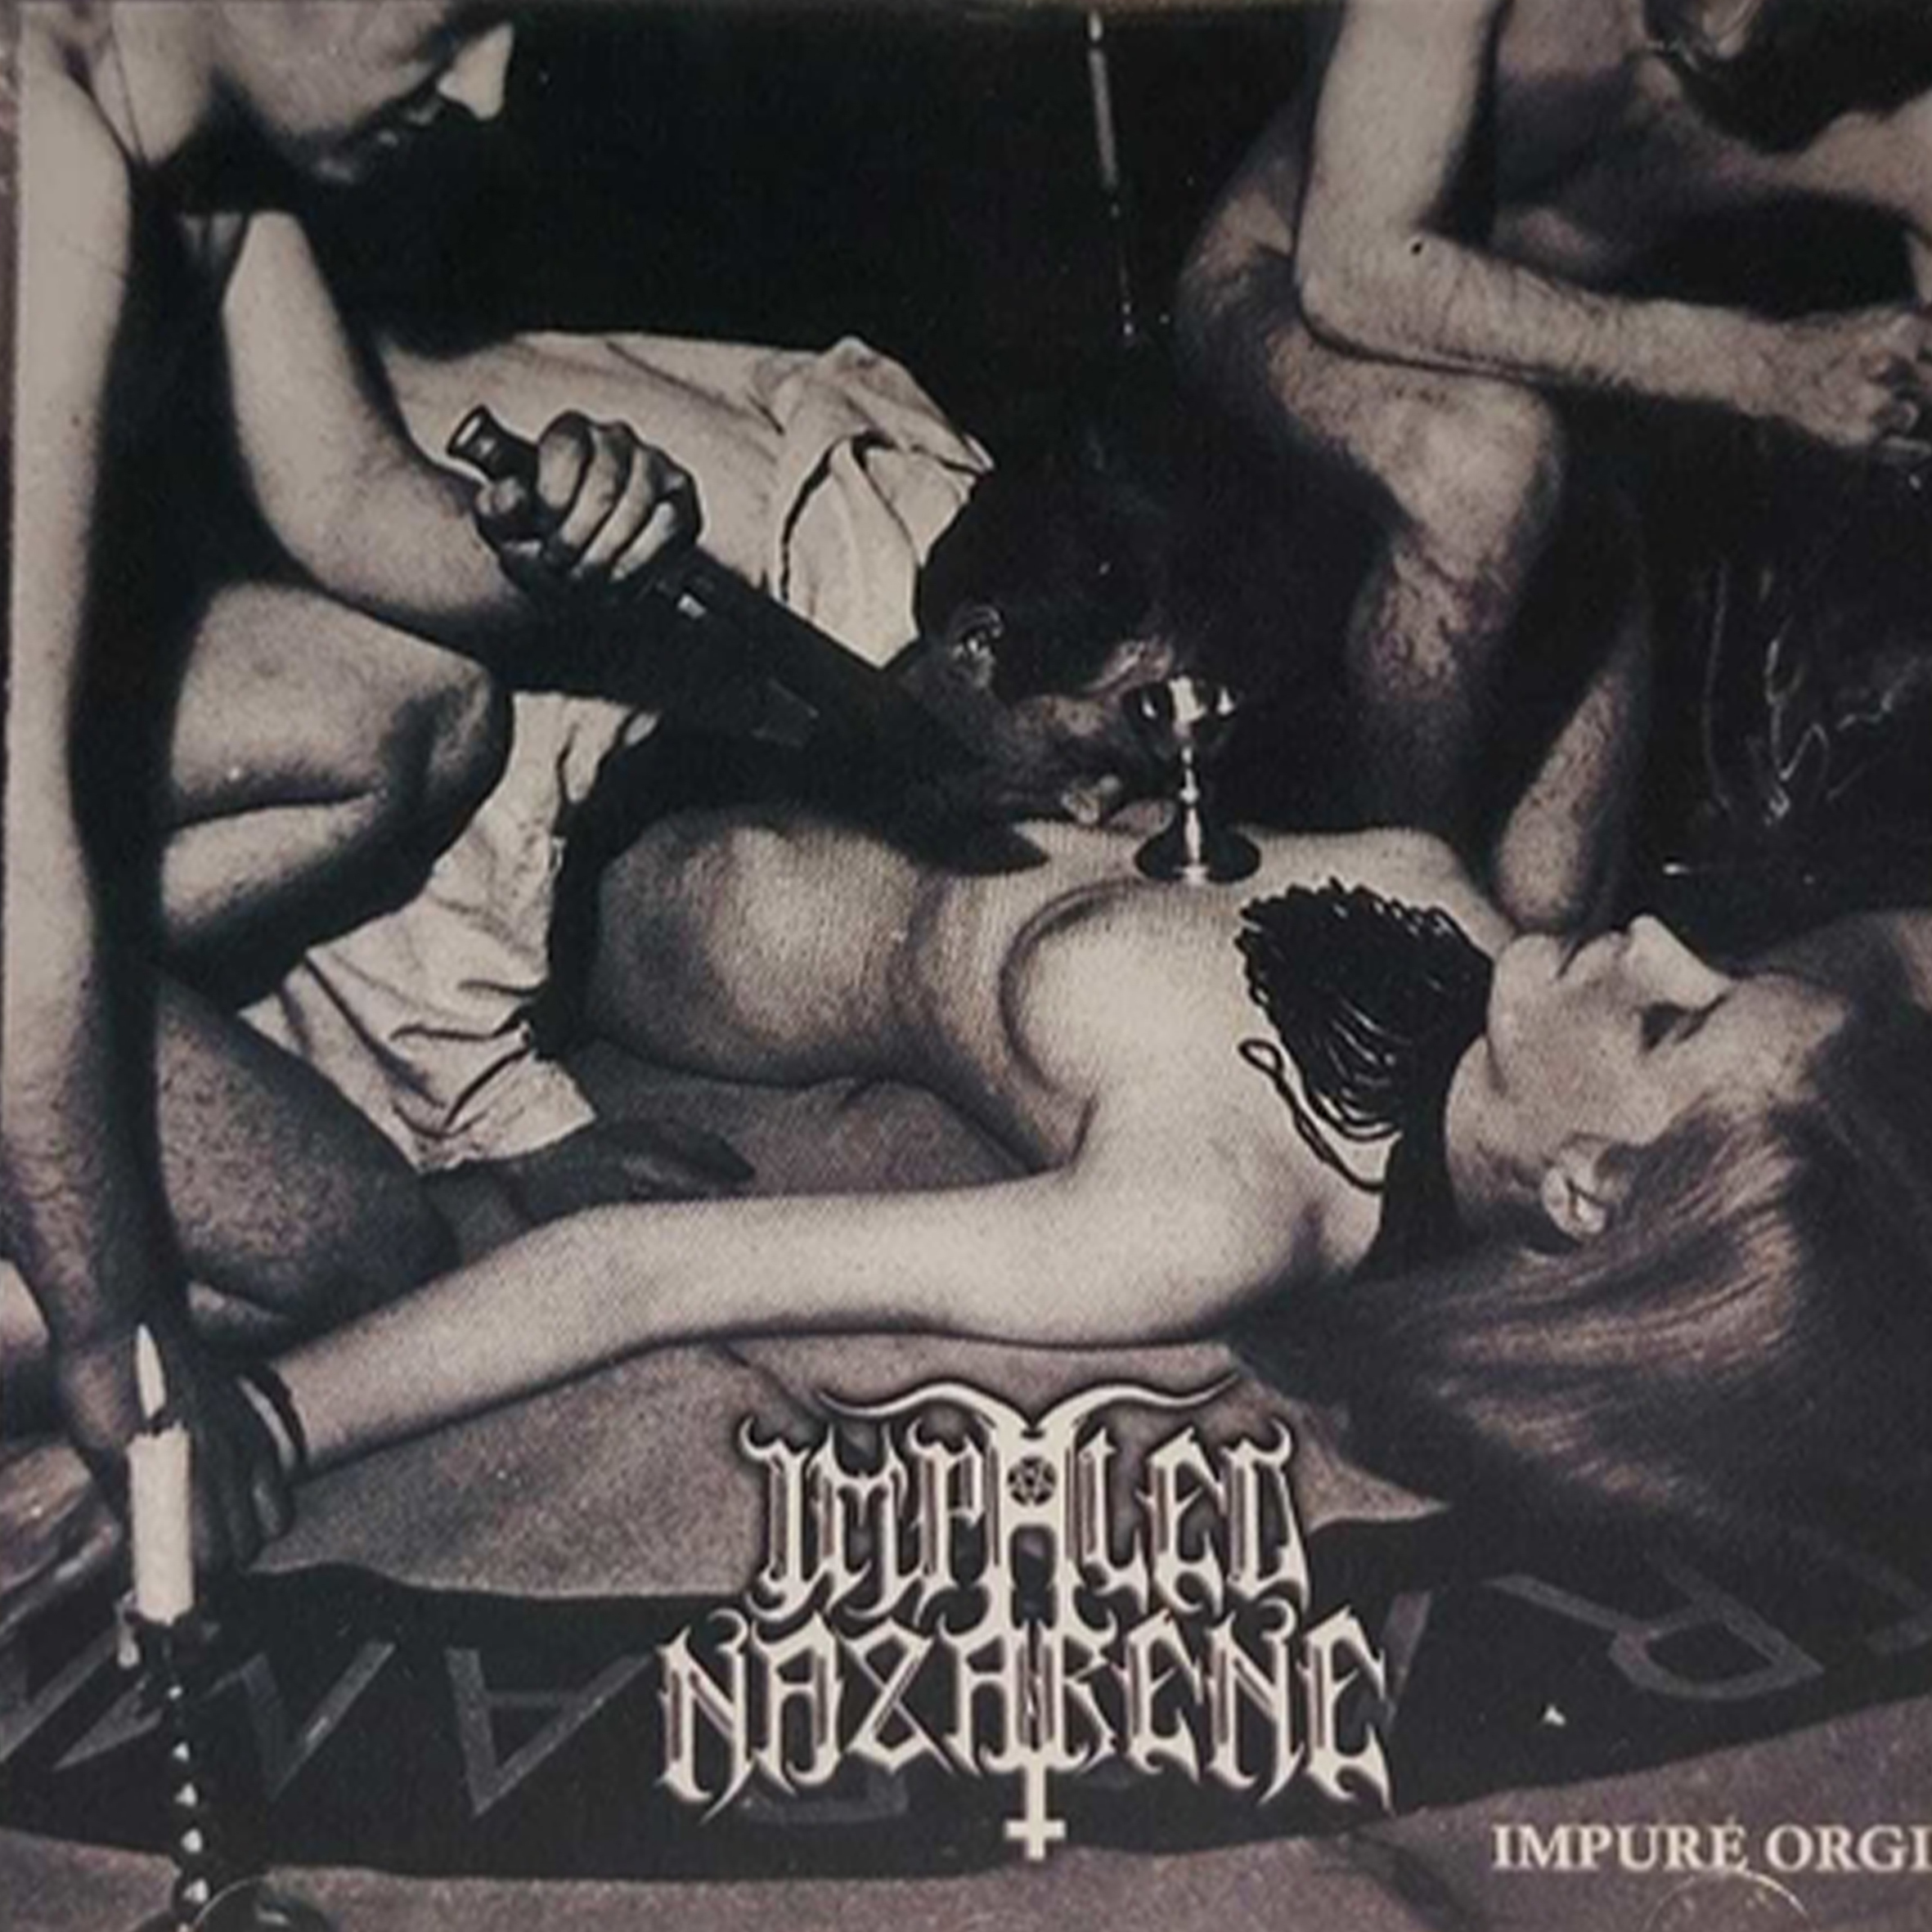 CD - Impaled Nazarene - Impure Orgies (Lacrado)